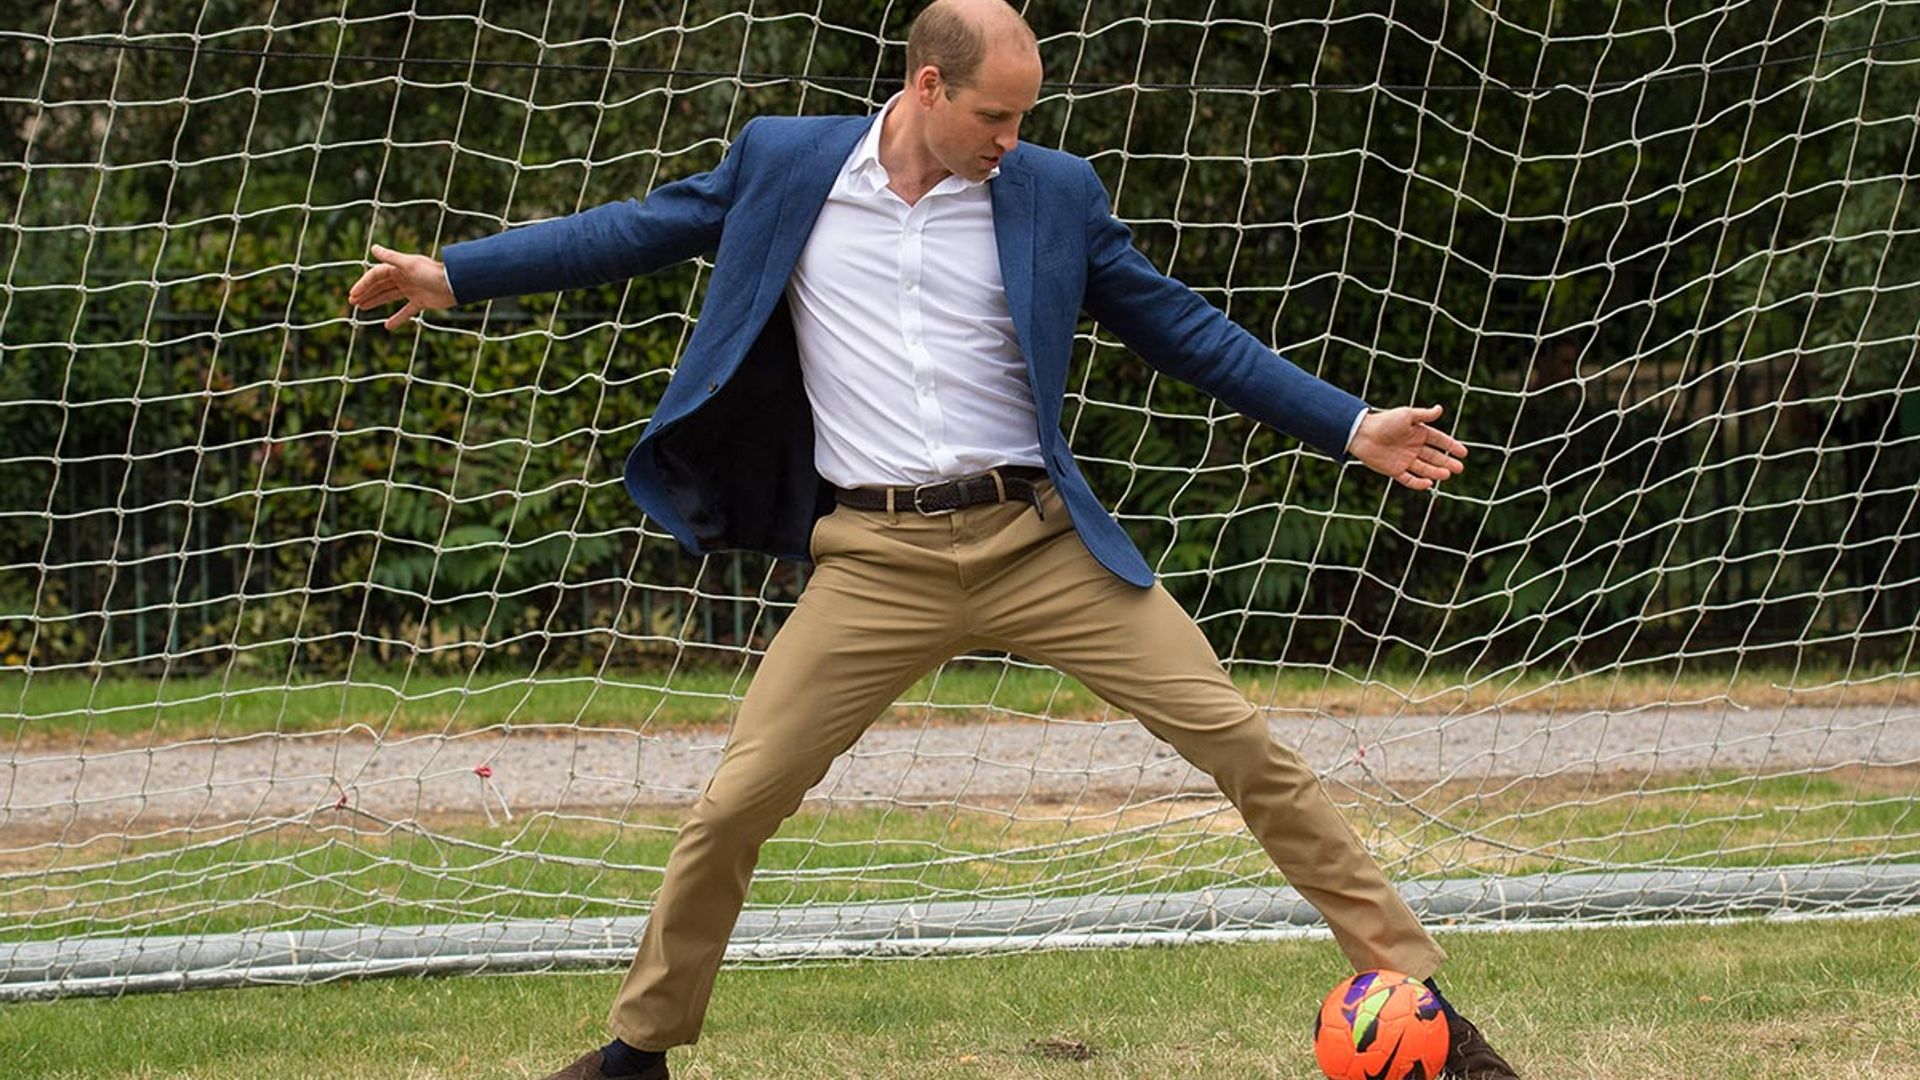 Prince-William-football